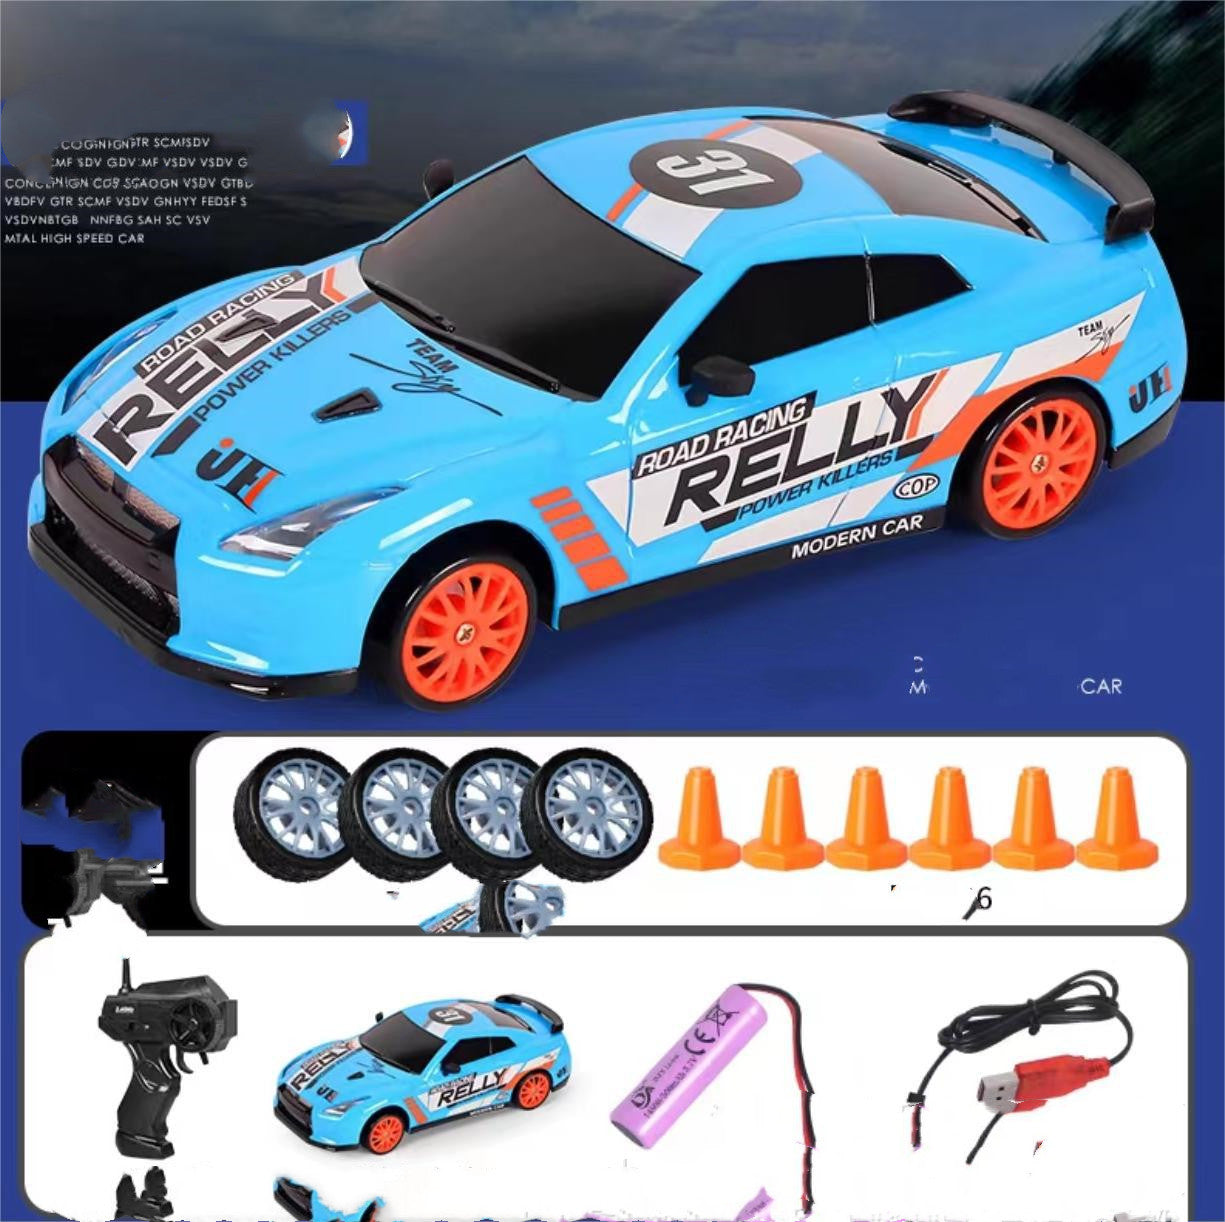 High-Speed 2.4G Remote Control Drift Racing Car Toy for Children - GTR Model AE86 Vehicle Toyland EU Toyland EU